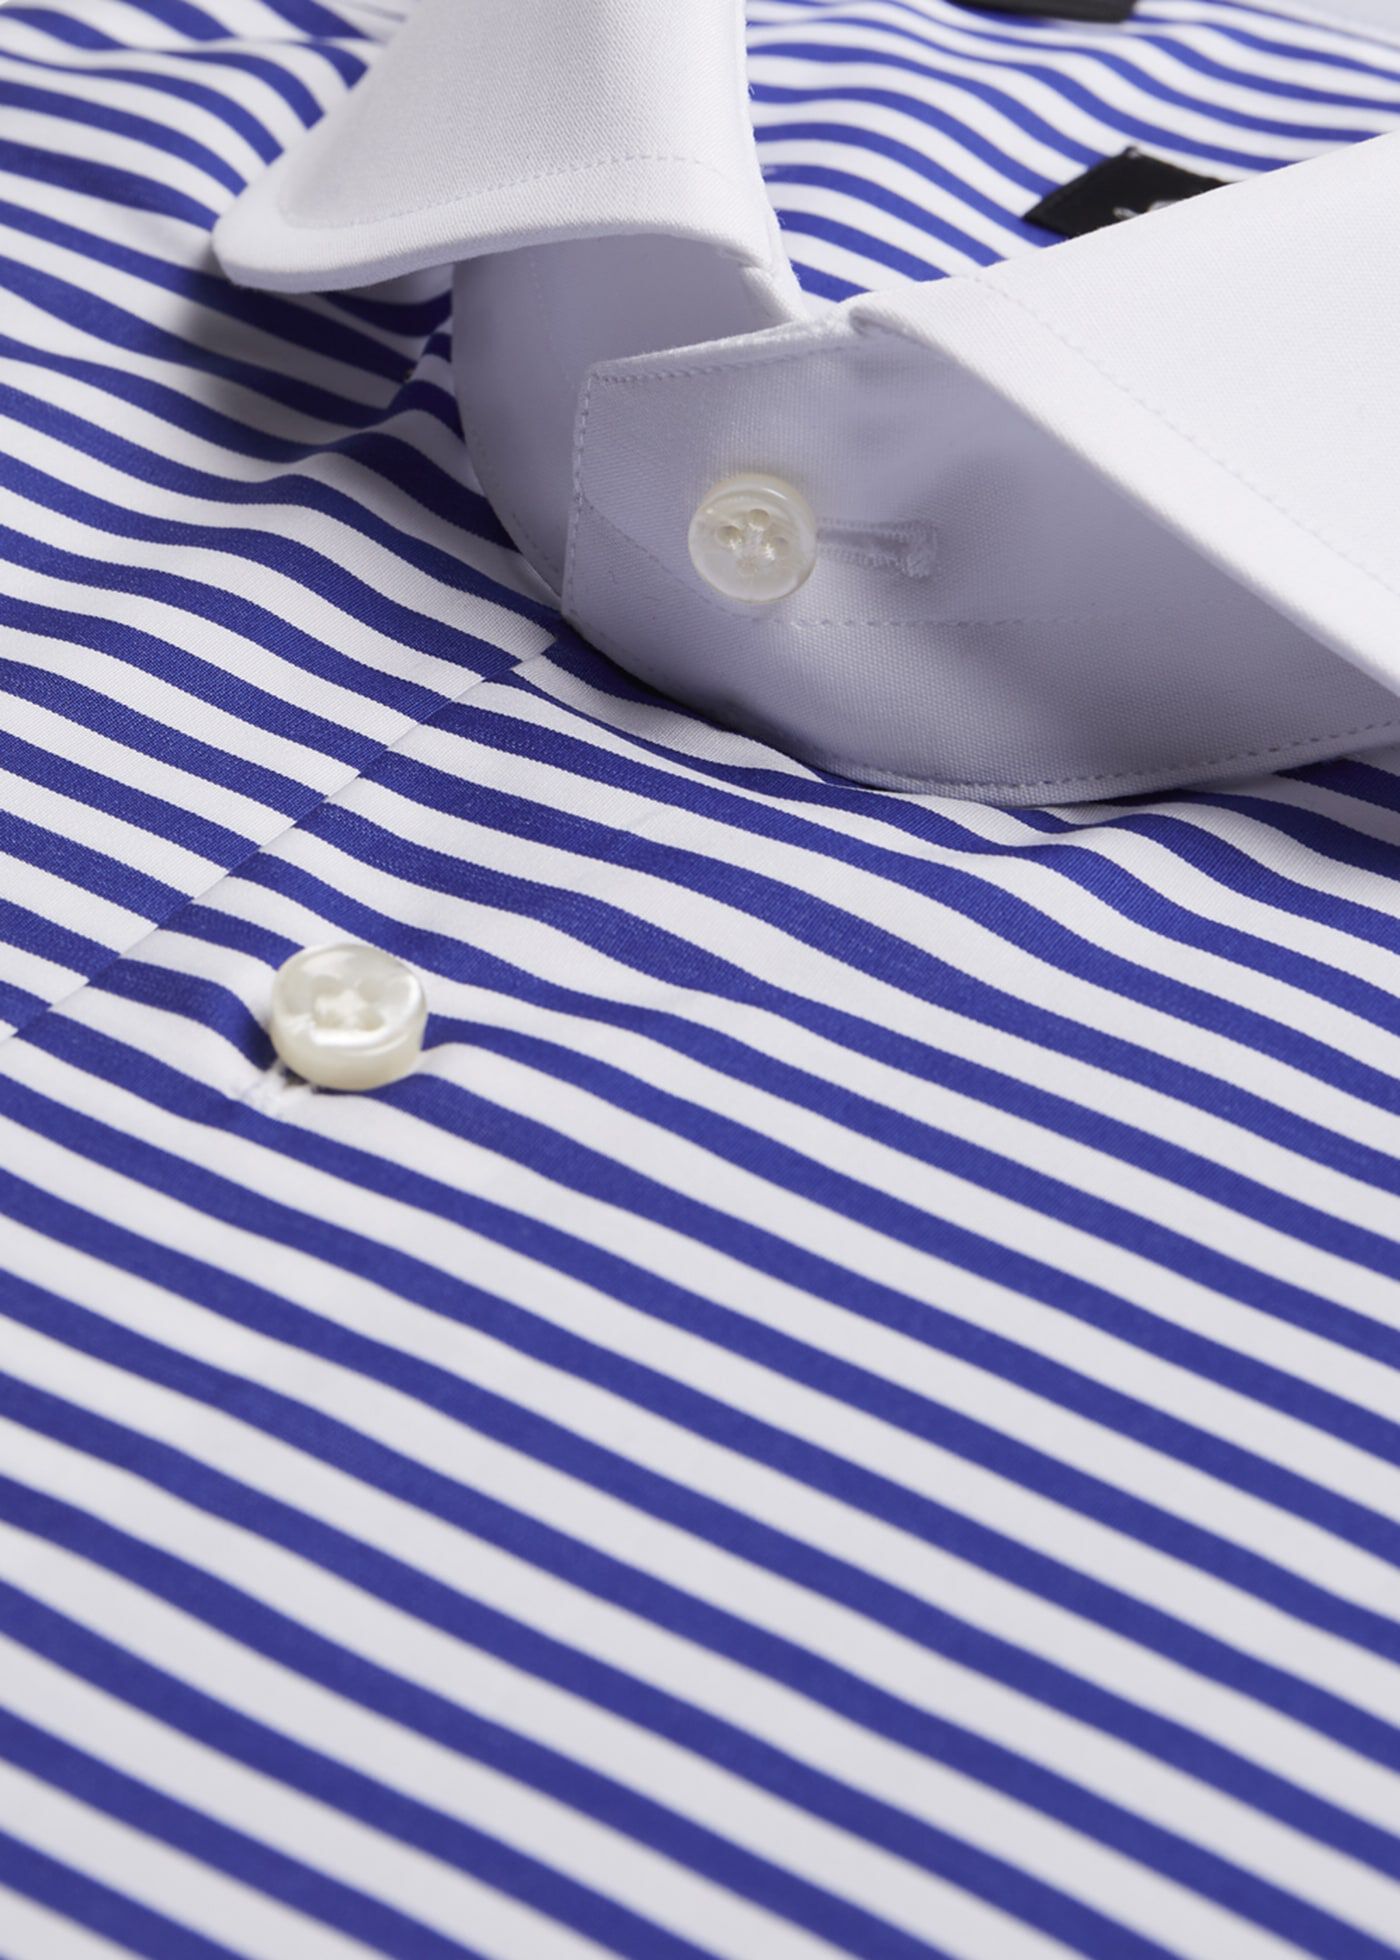 Blue Horizontal Stripe Dress Shirt